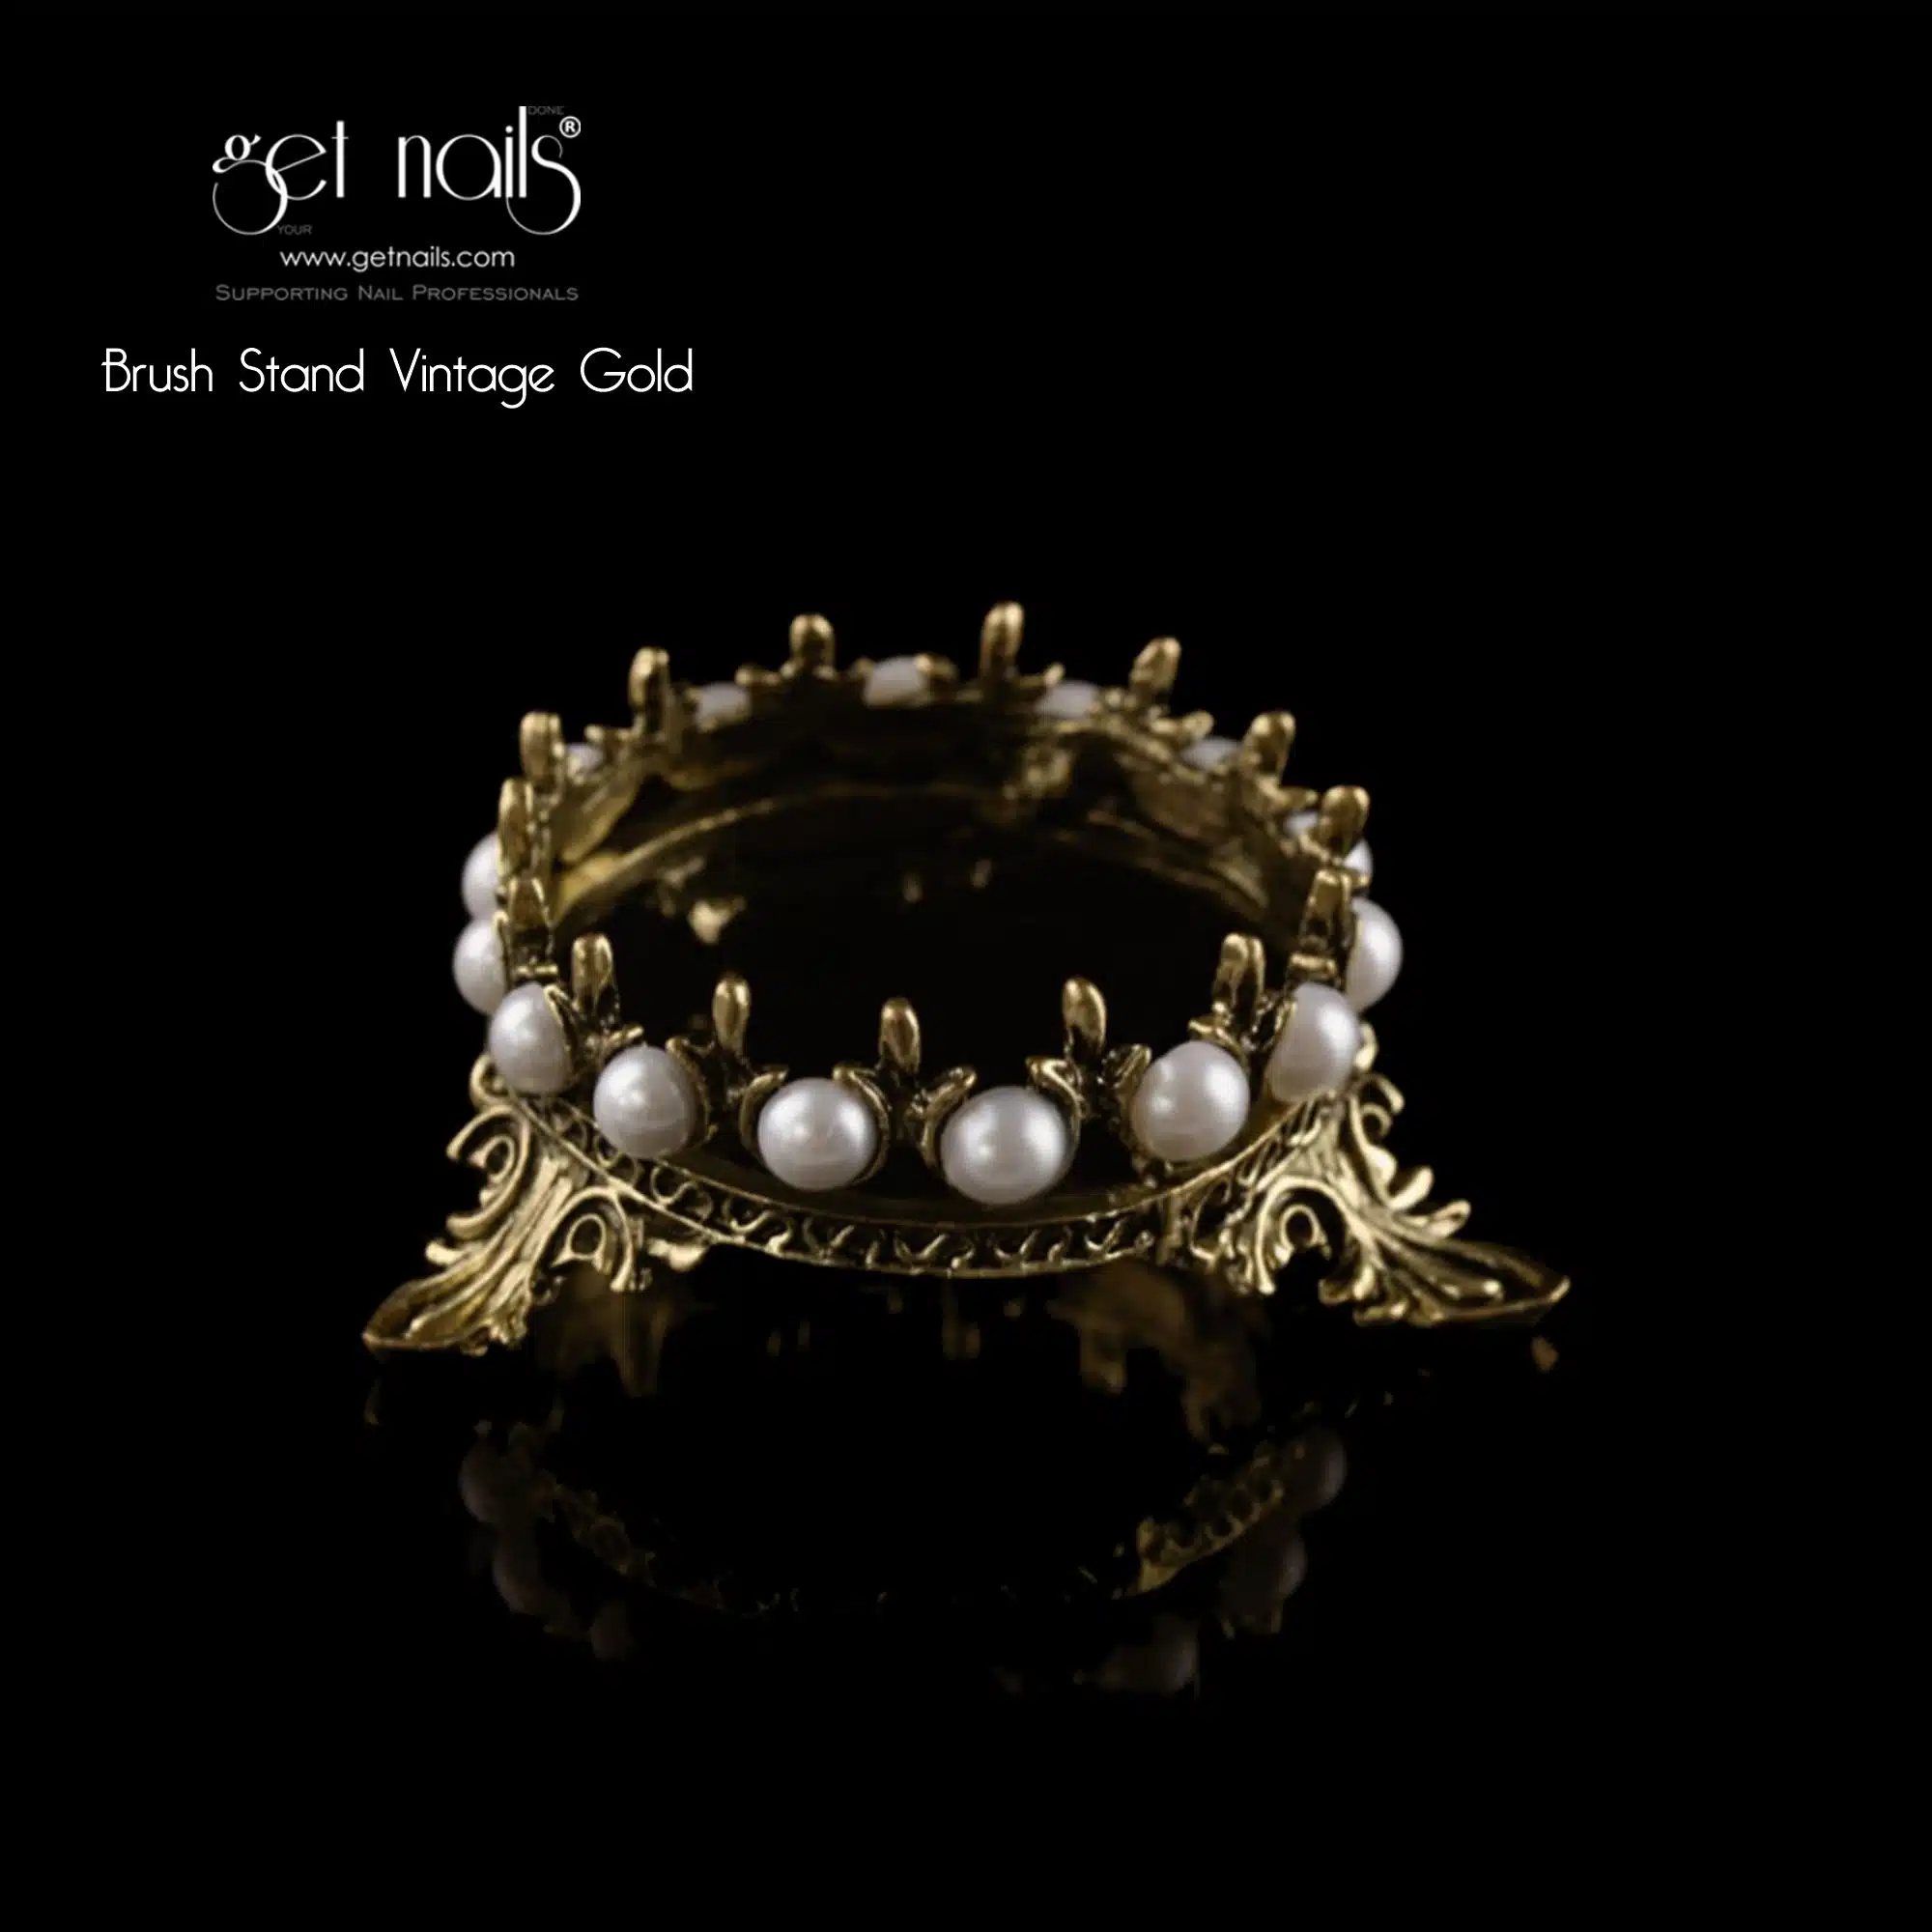 Get Nails Austria - Держатель для кистей Vintage Gold